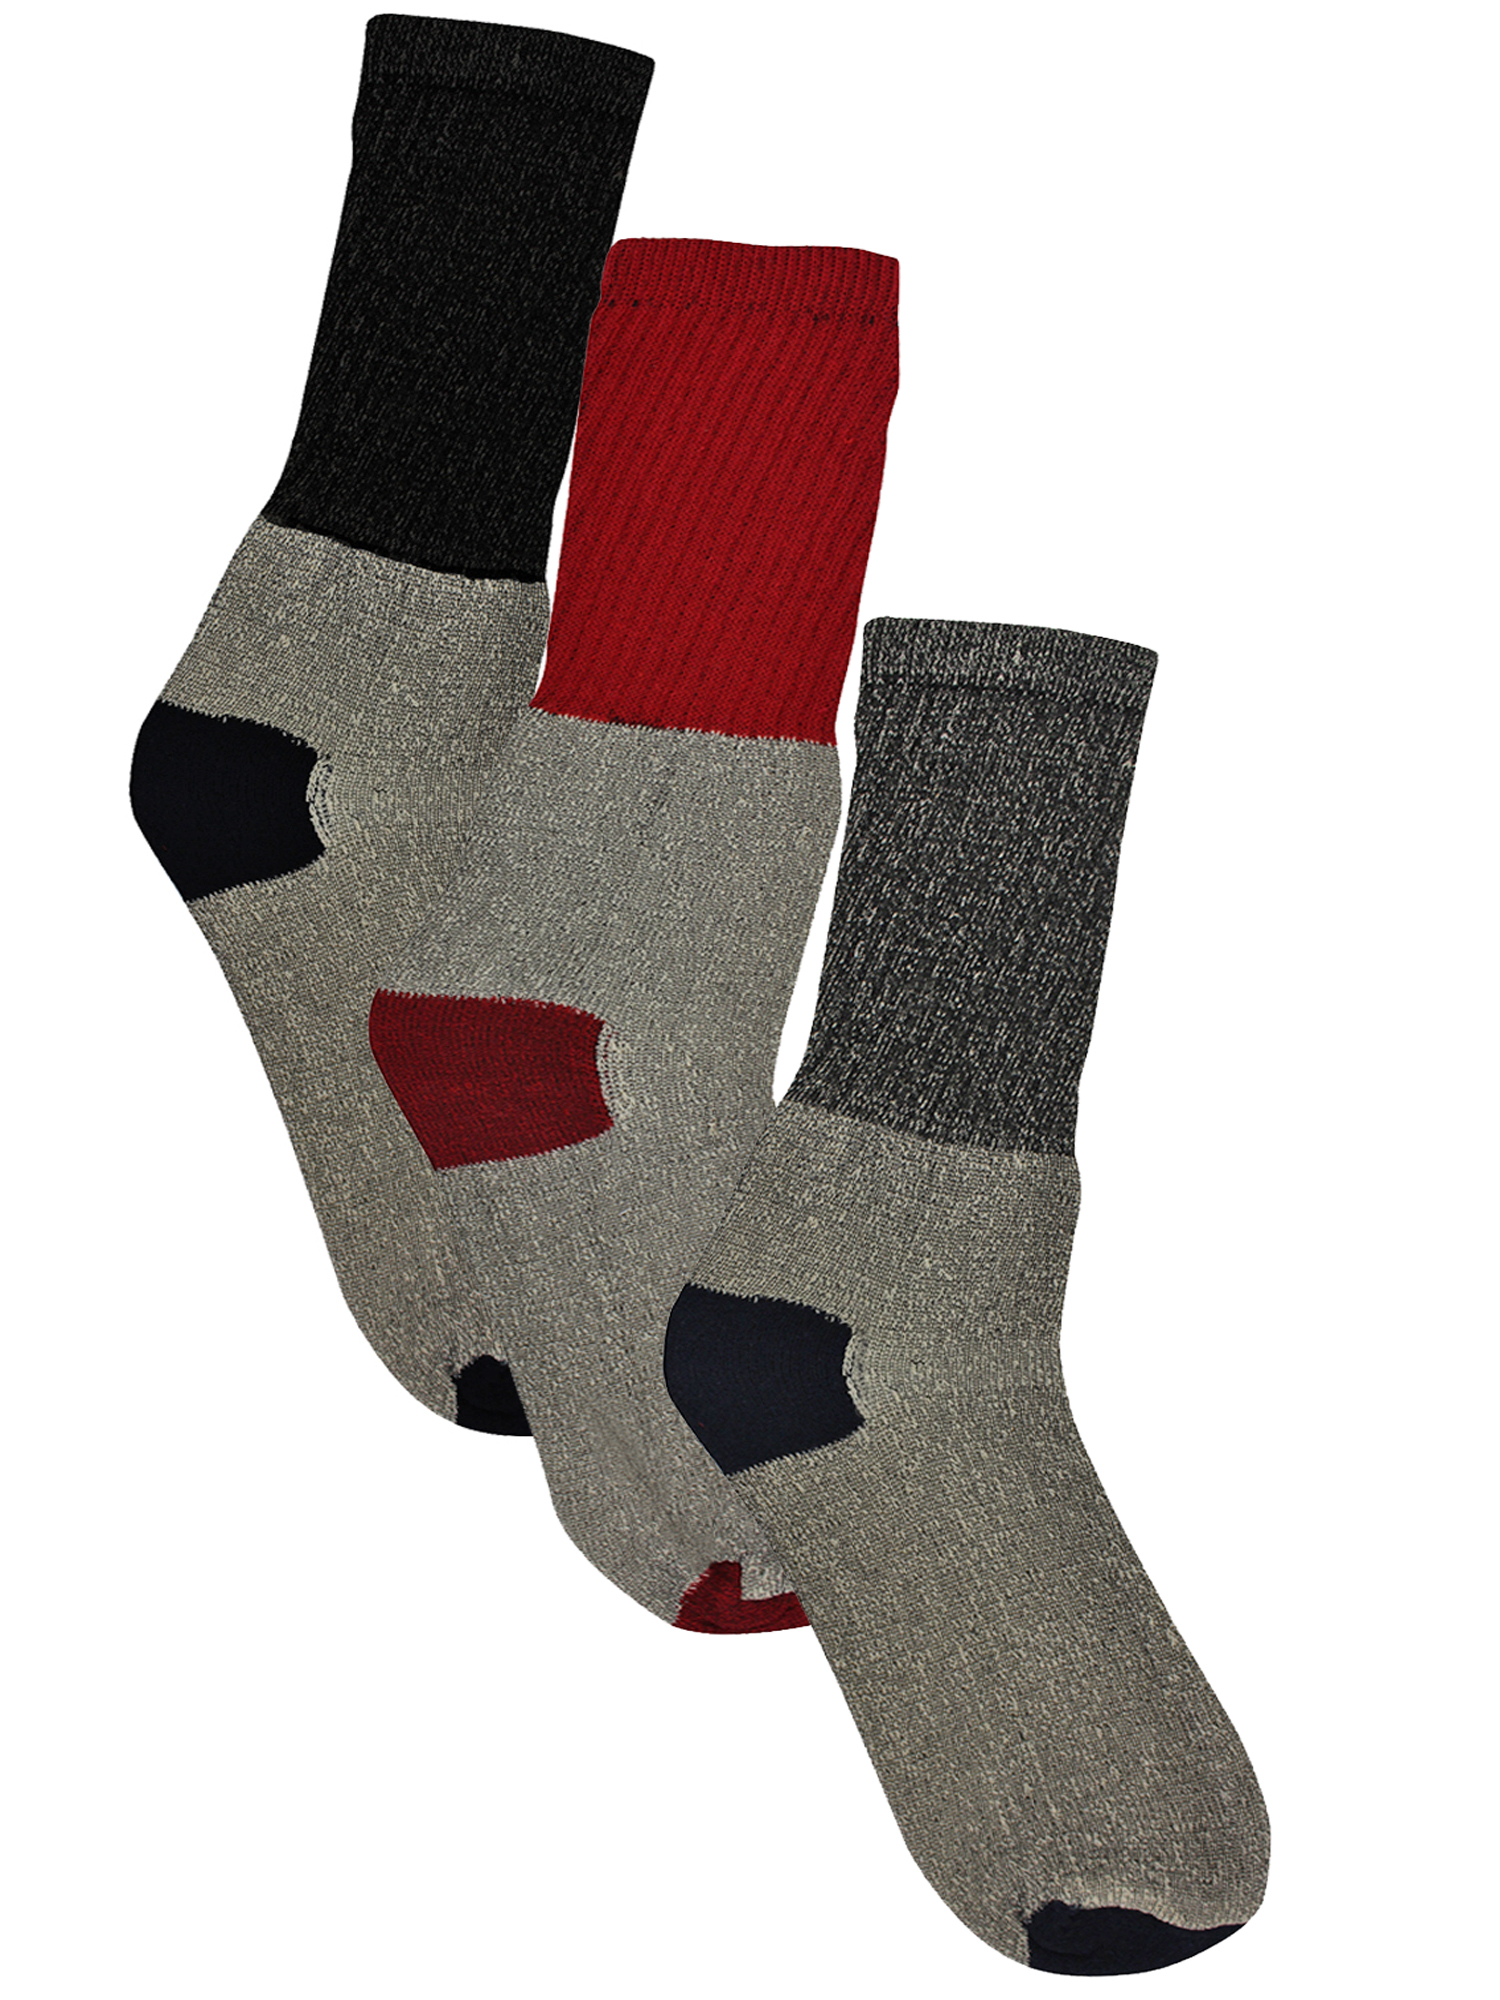 Mens 3-Pack Thermal Cotton Crew Socks - image 1 of 2